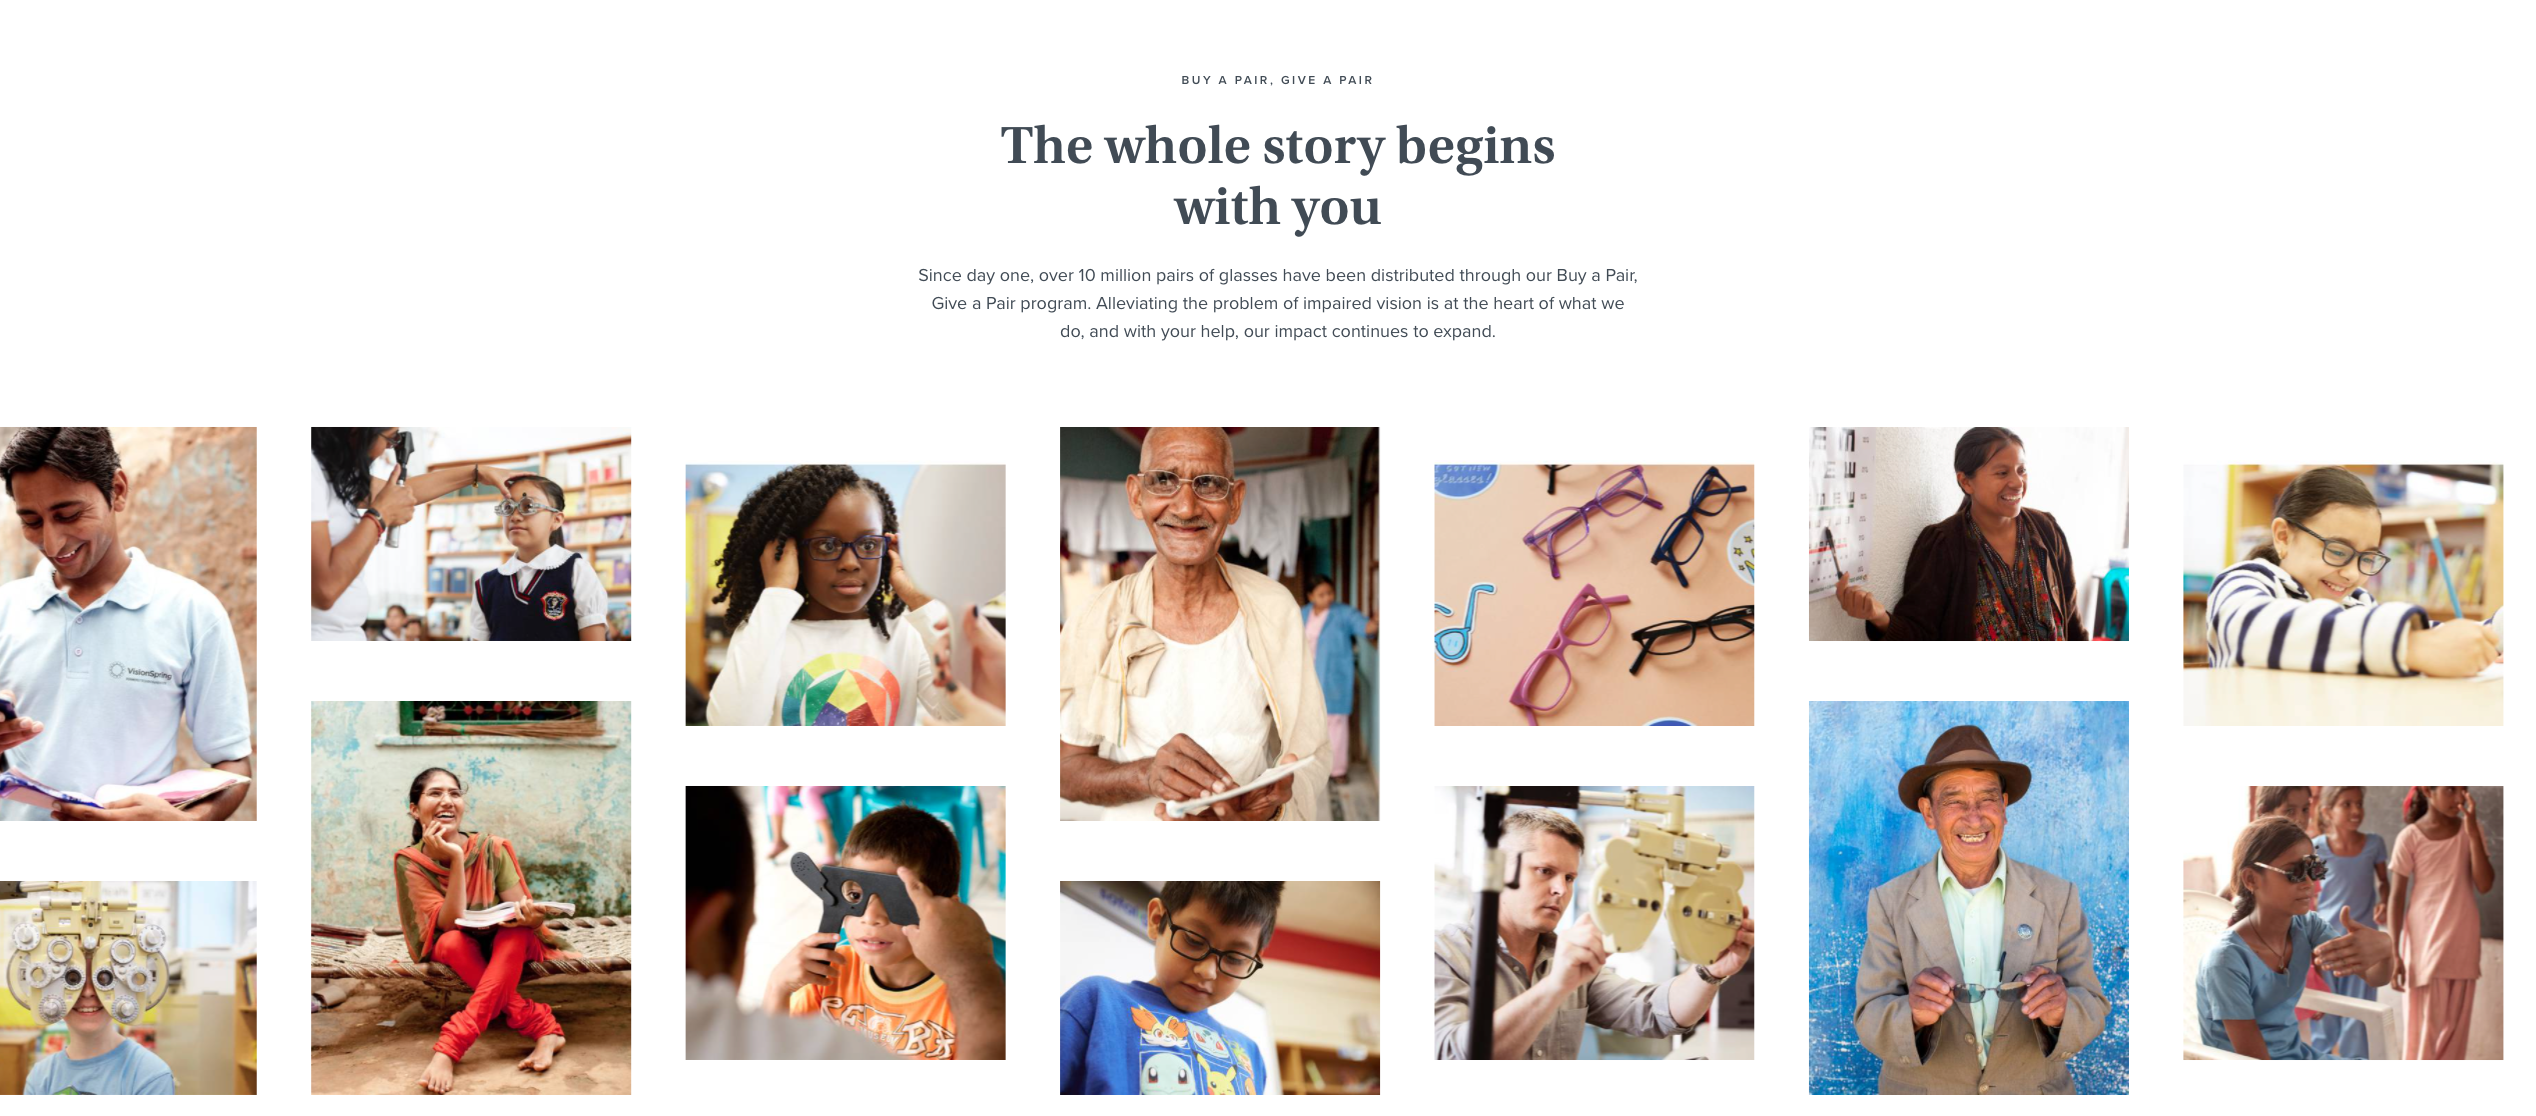 Warby Parker brand storytelling